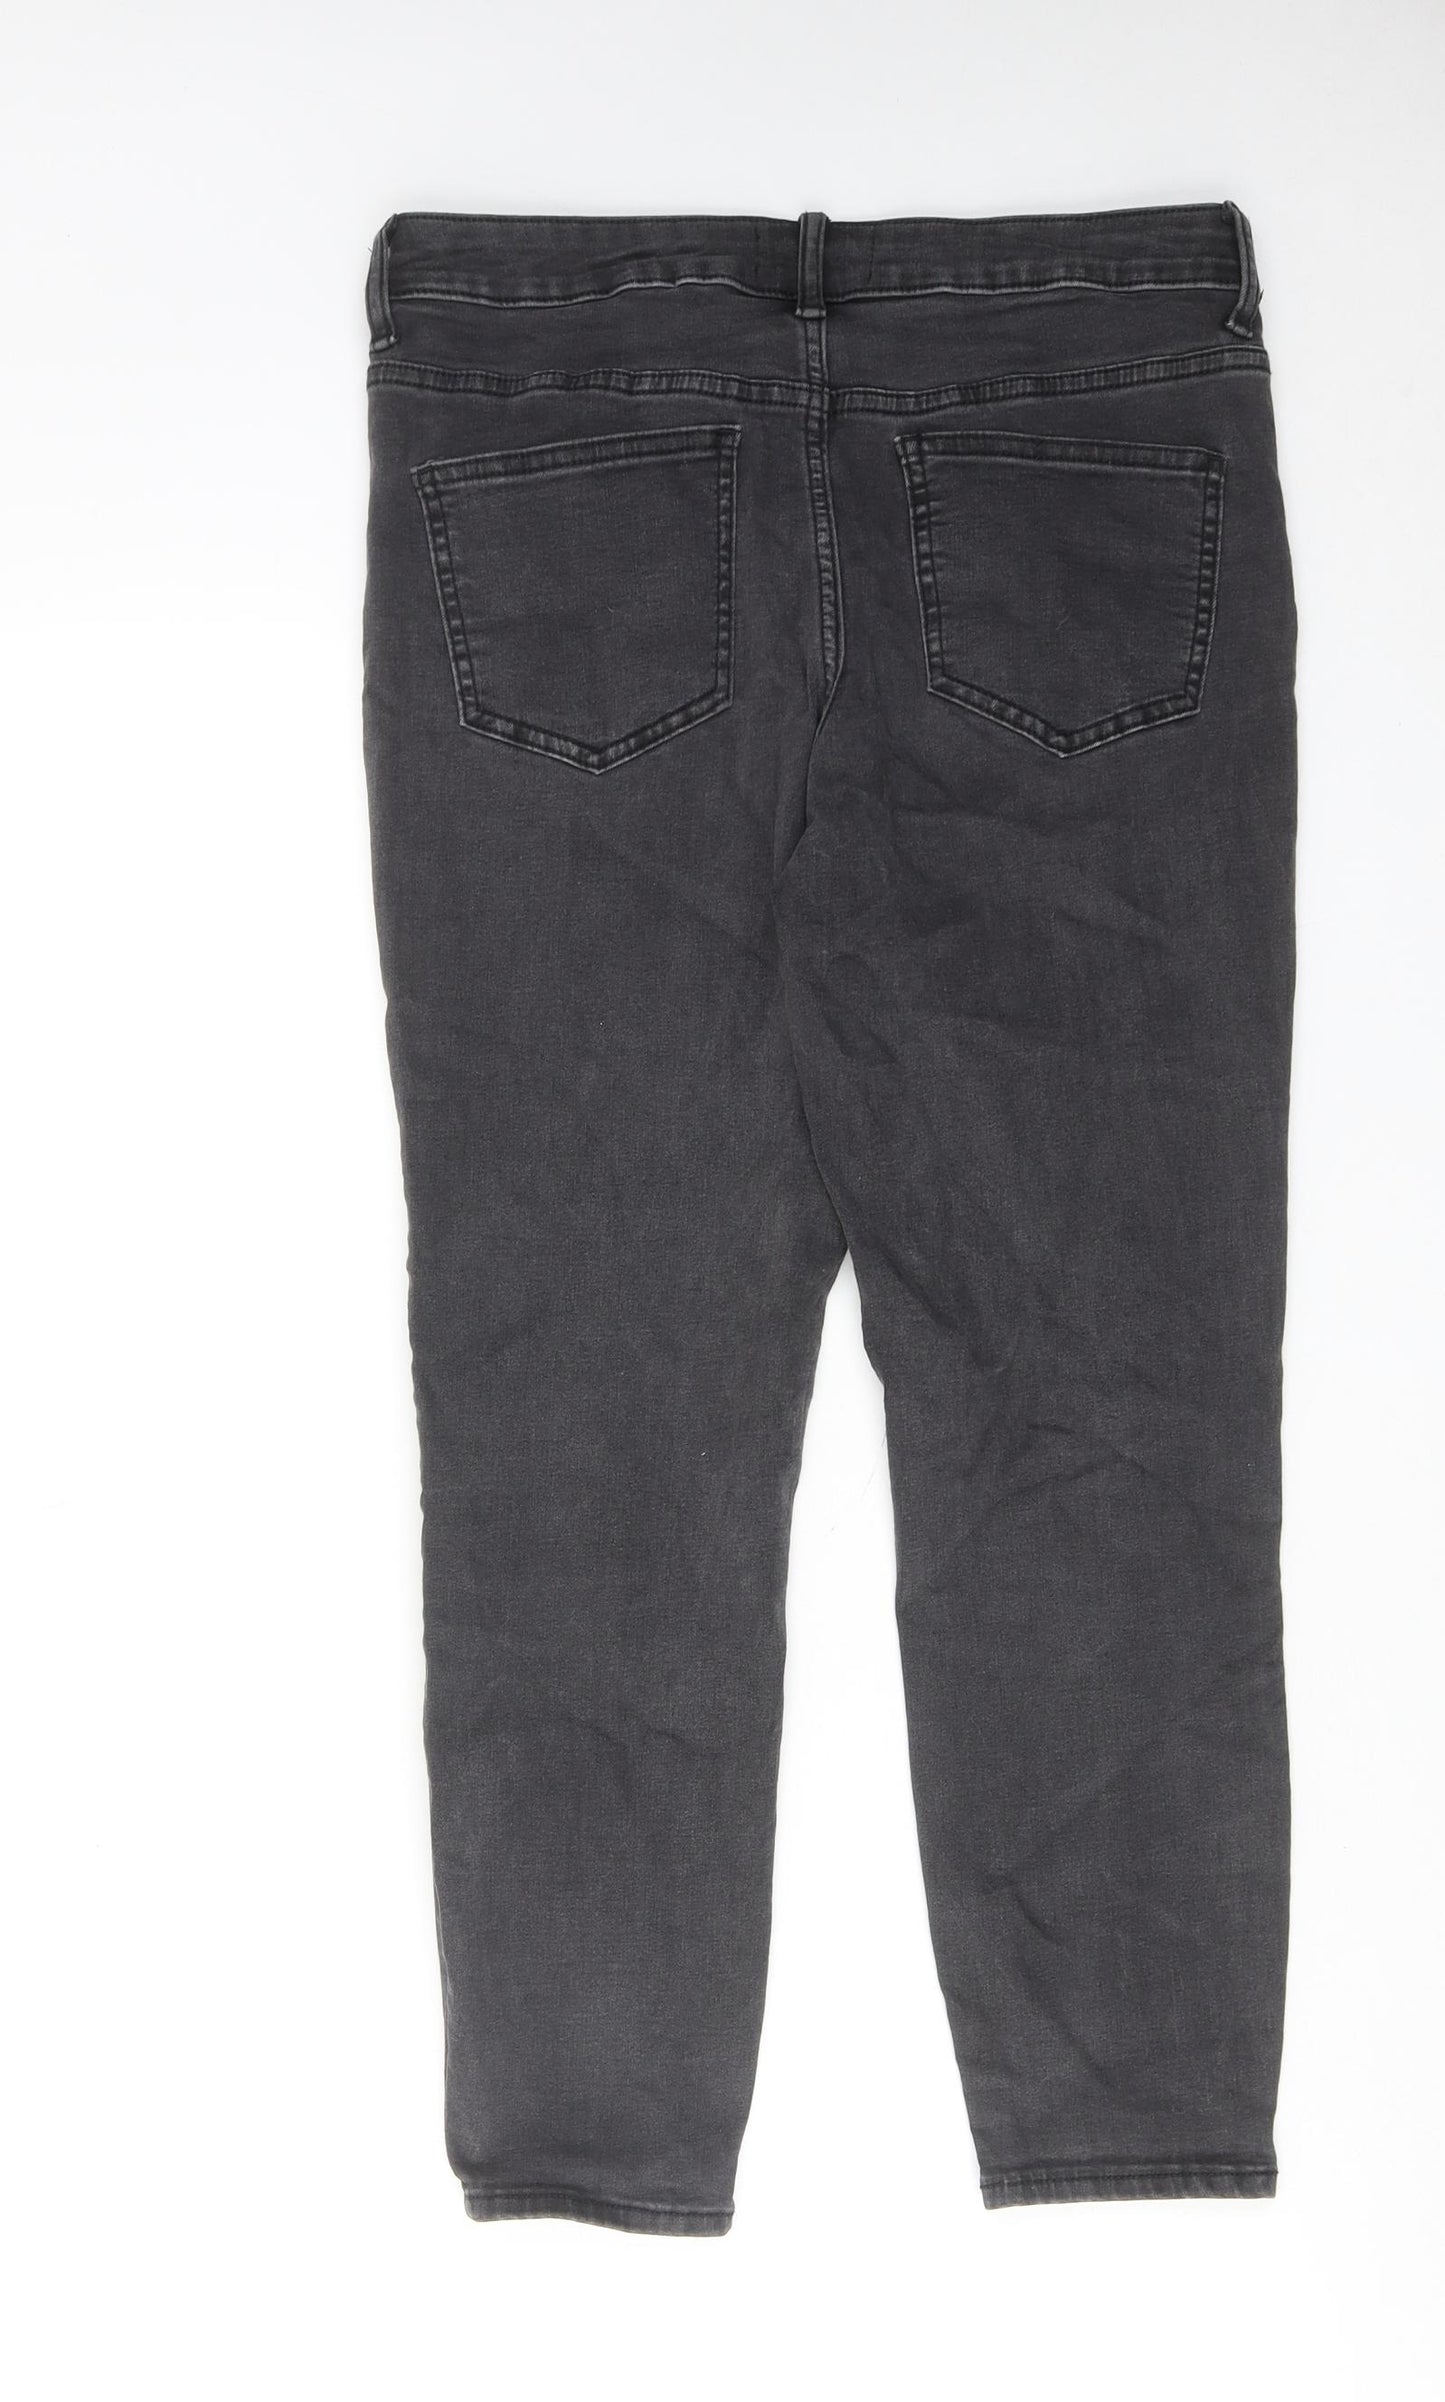 ASOS Womens Grey Cotton Skinny Jeans Size 30 in L26 in Regular Zip